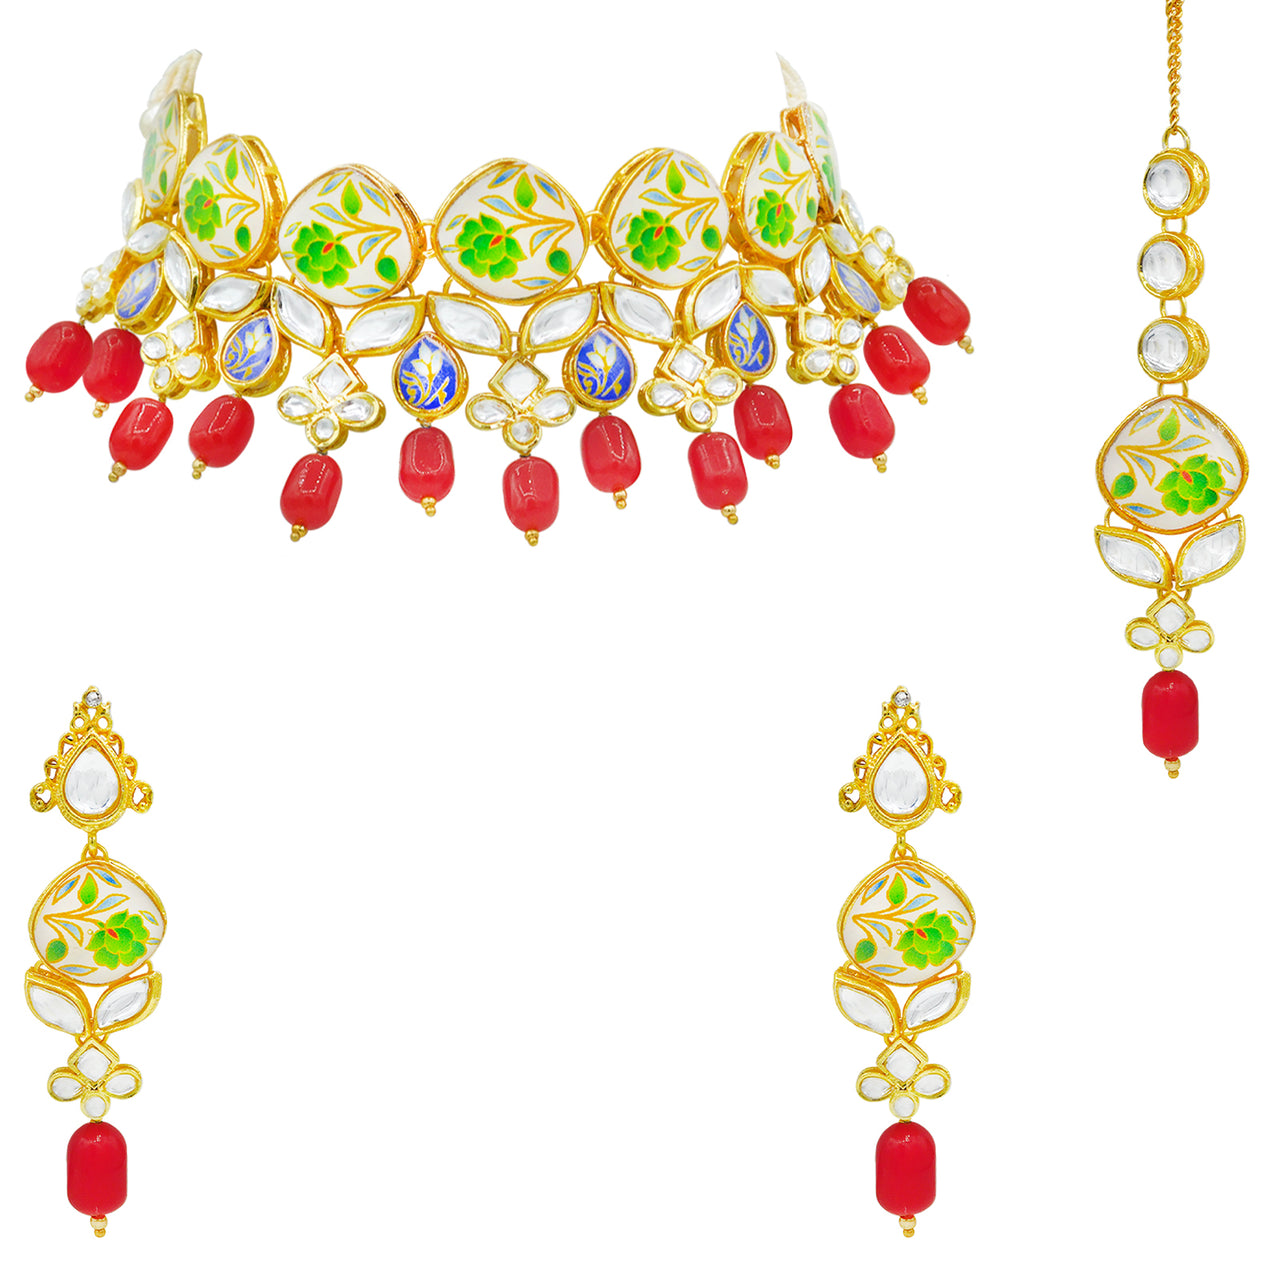 Sujwel Kundan and Painting with Floral Design Chokar Necklace Set (08-0281) - Sujwel